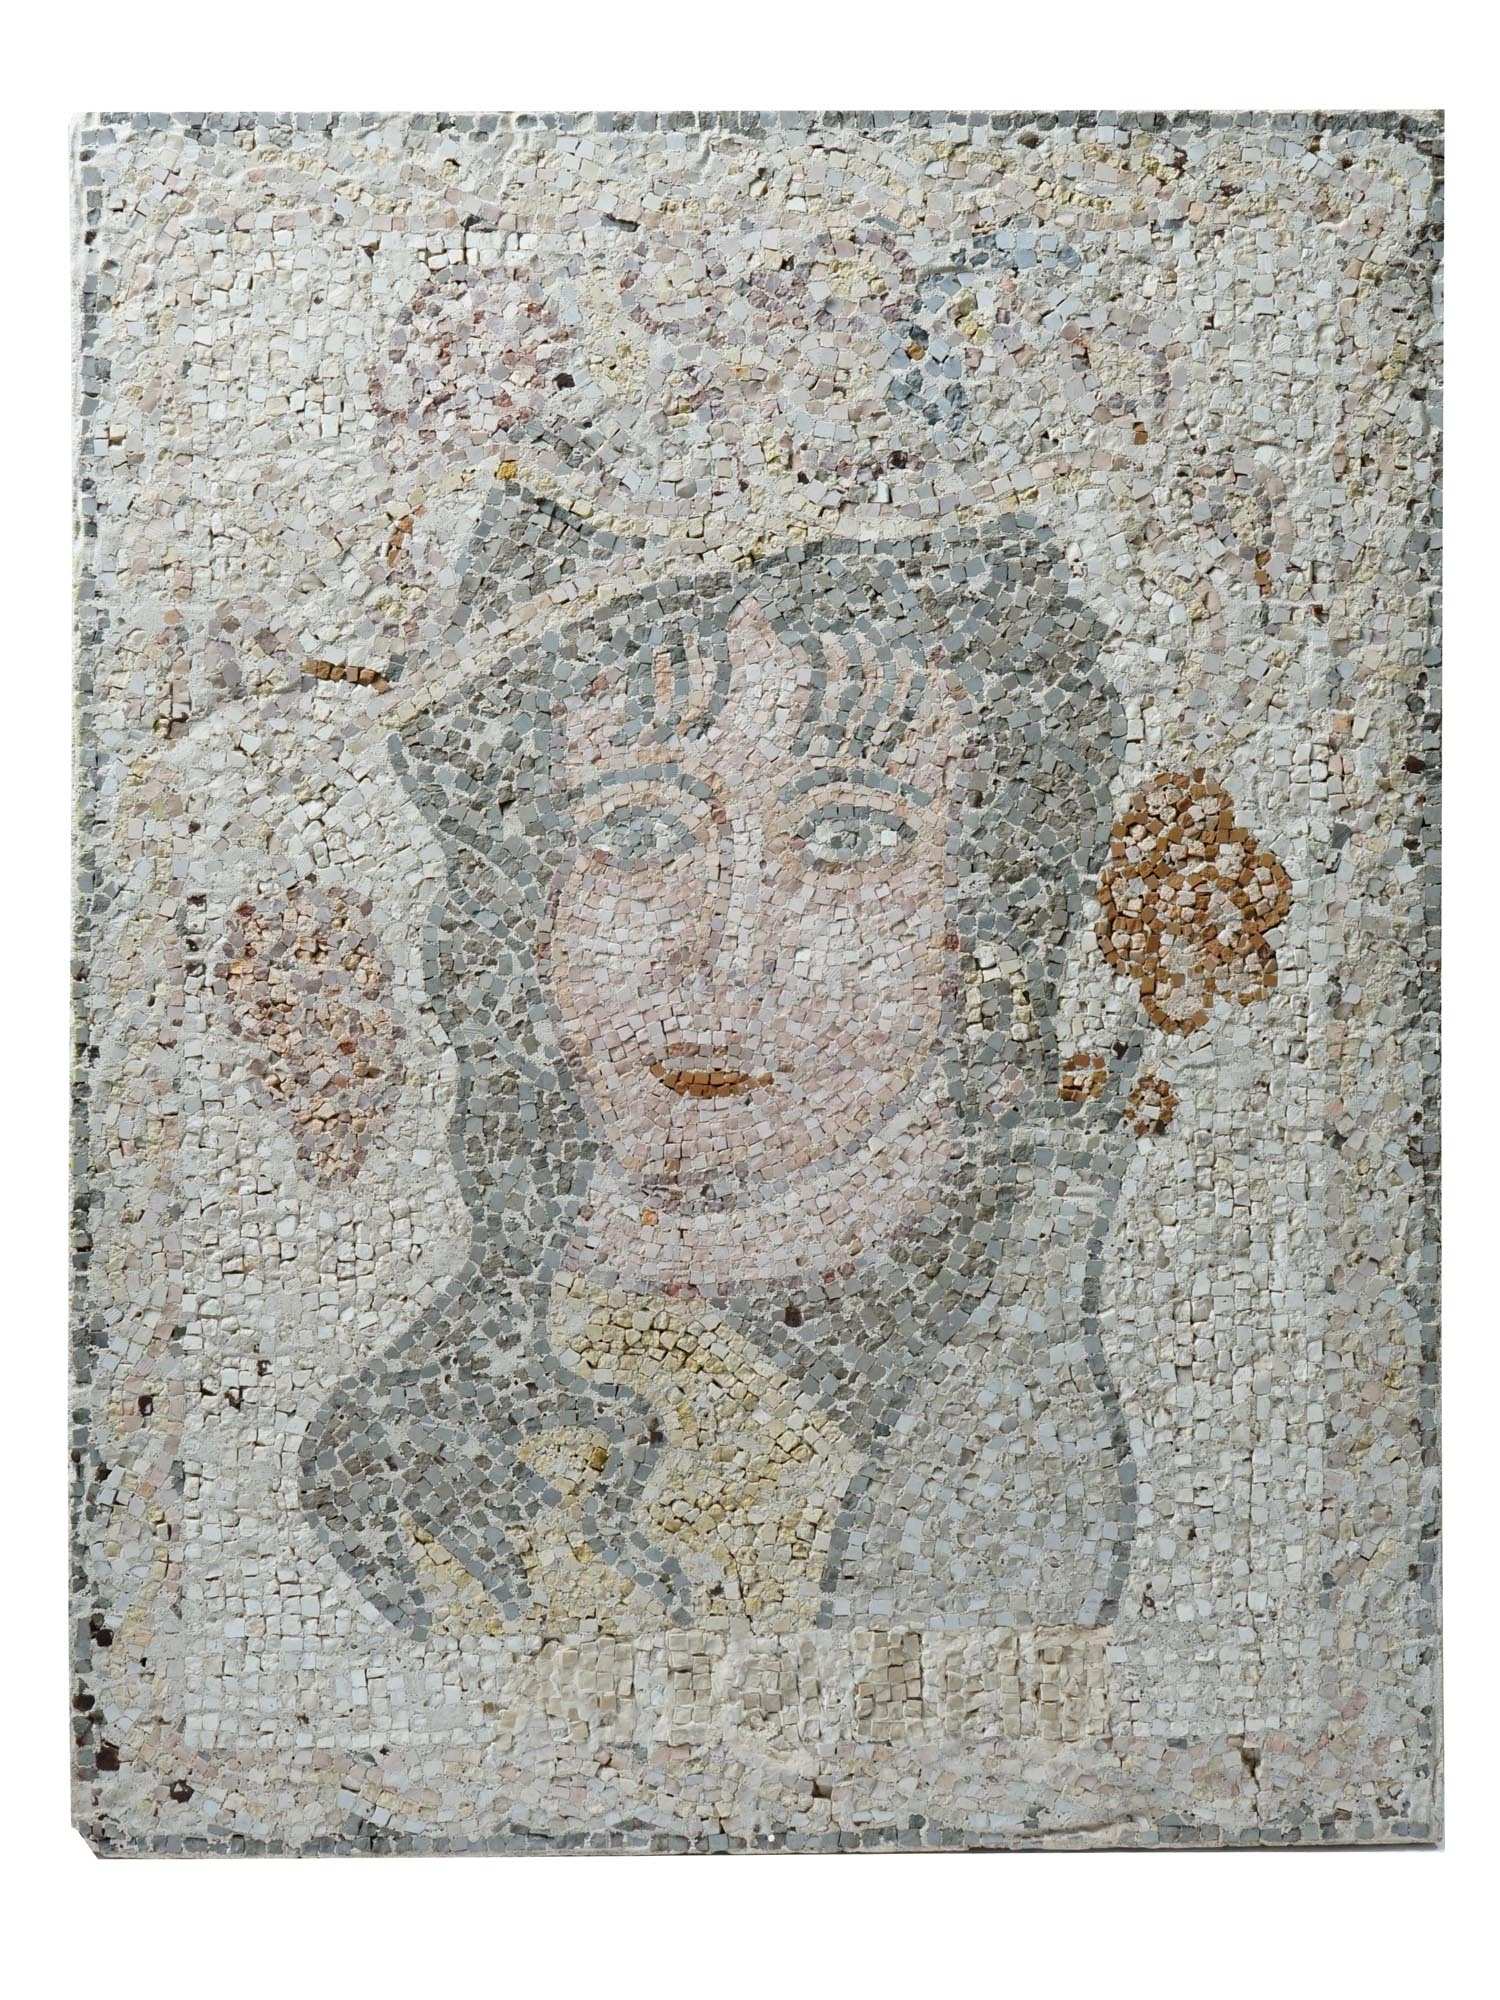 ANCIENT IMPERIAL ROMAN MOSAIC OF FEMALE PORTRAIT PIC-0